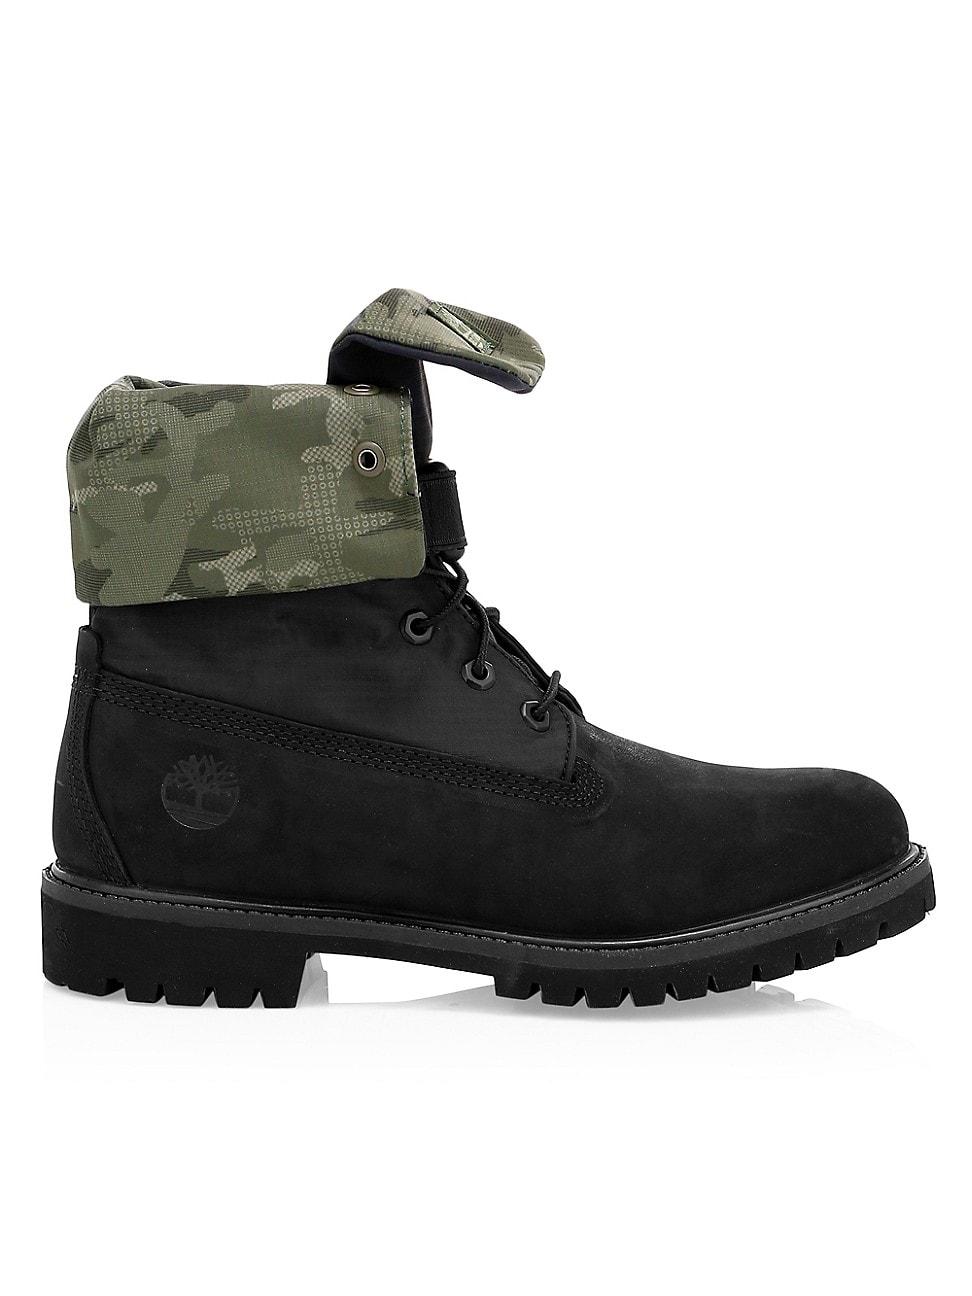 Black Camouflage Timberland Boots Slovakia, SAVE 58% - lutheranems.com